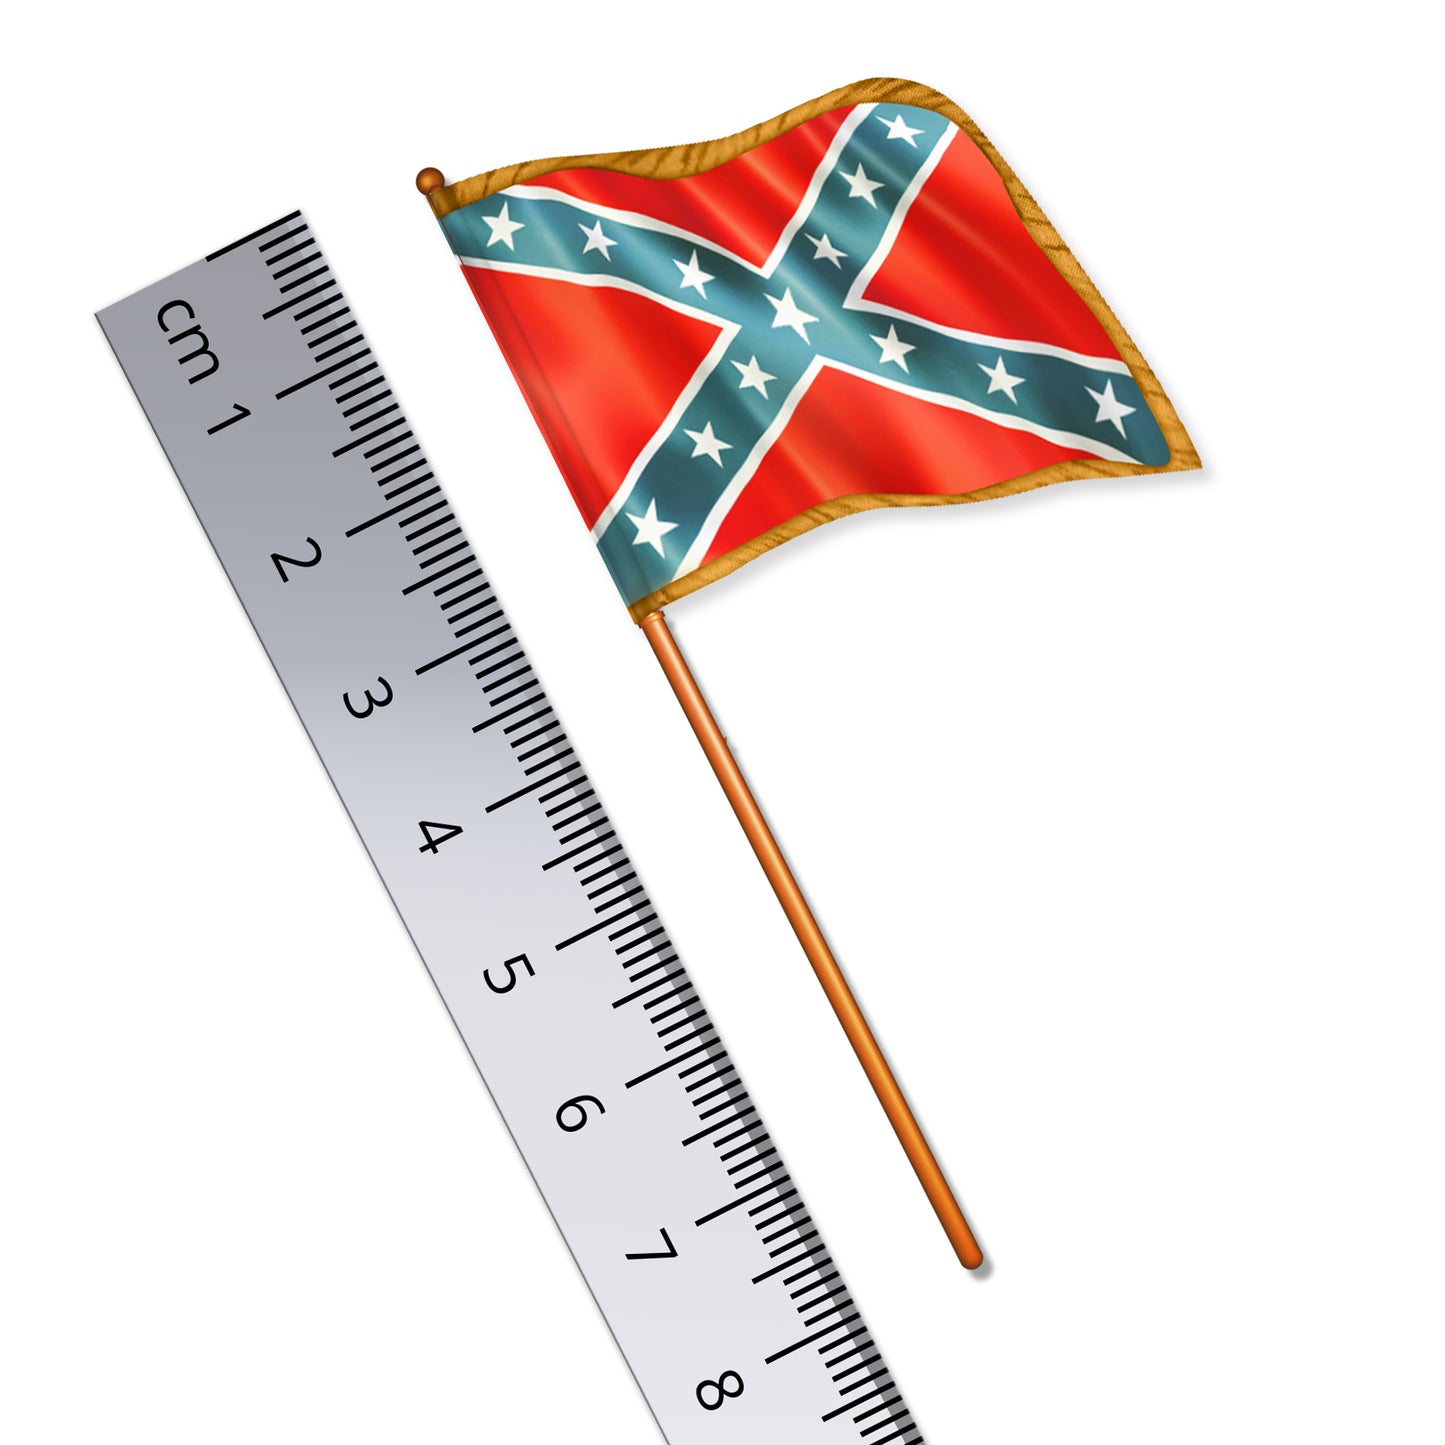 Confederate 'General Lee' Flag (US Civil War, South)